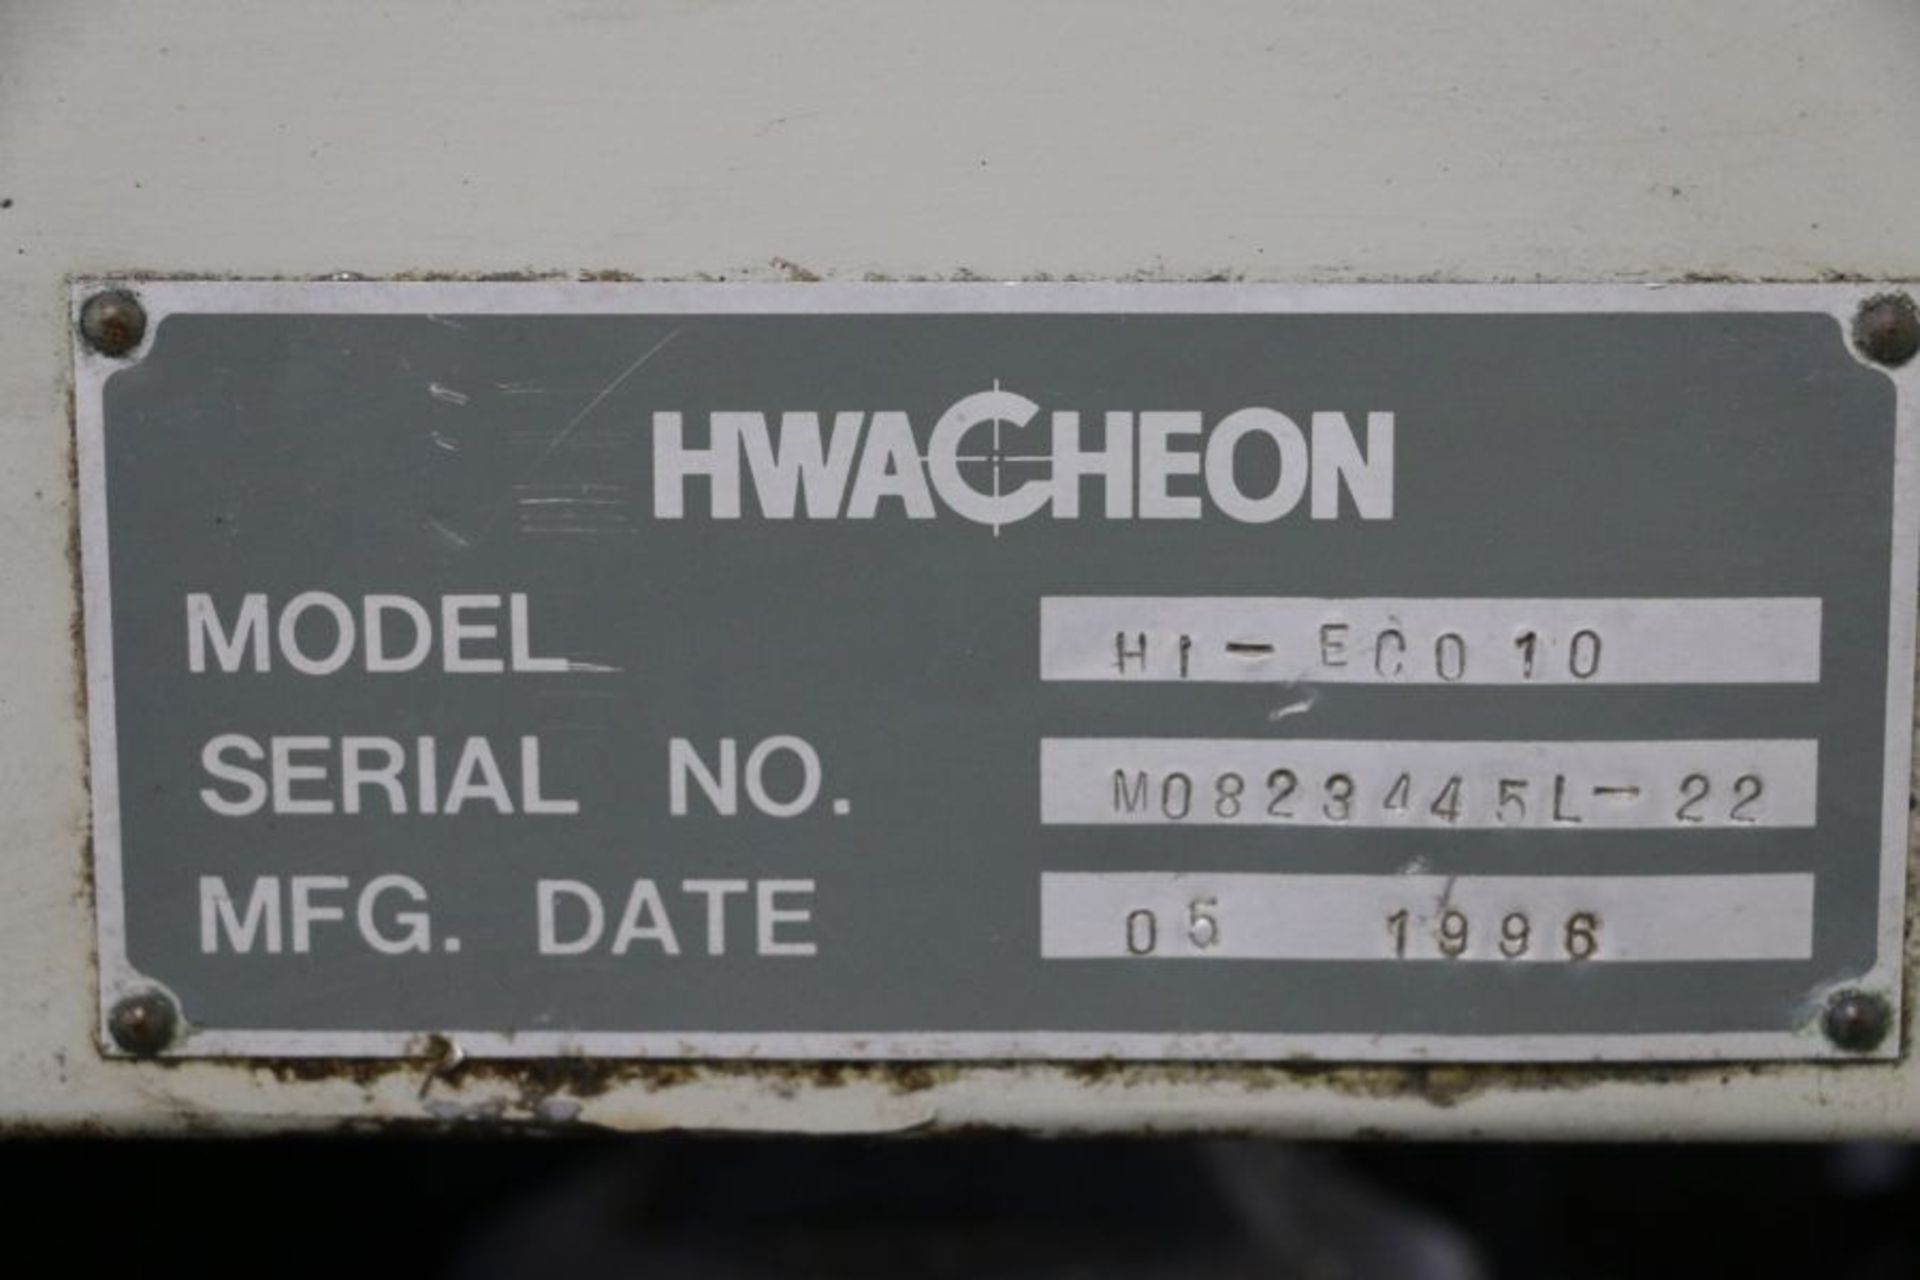 1996, Hwacheon Hi-Eco10 CNC Lathe, Fanuc 0T Control, 8" Chuck, 10 Position Turret, Tailstock - Image 10 of 10